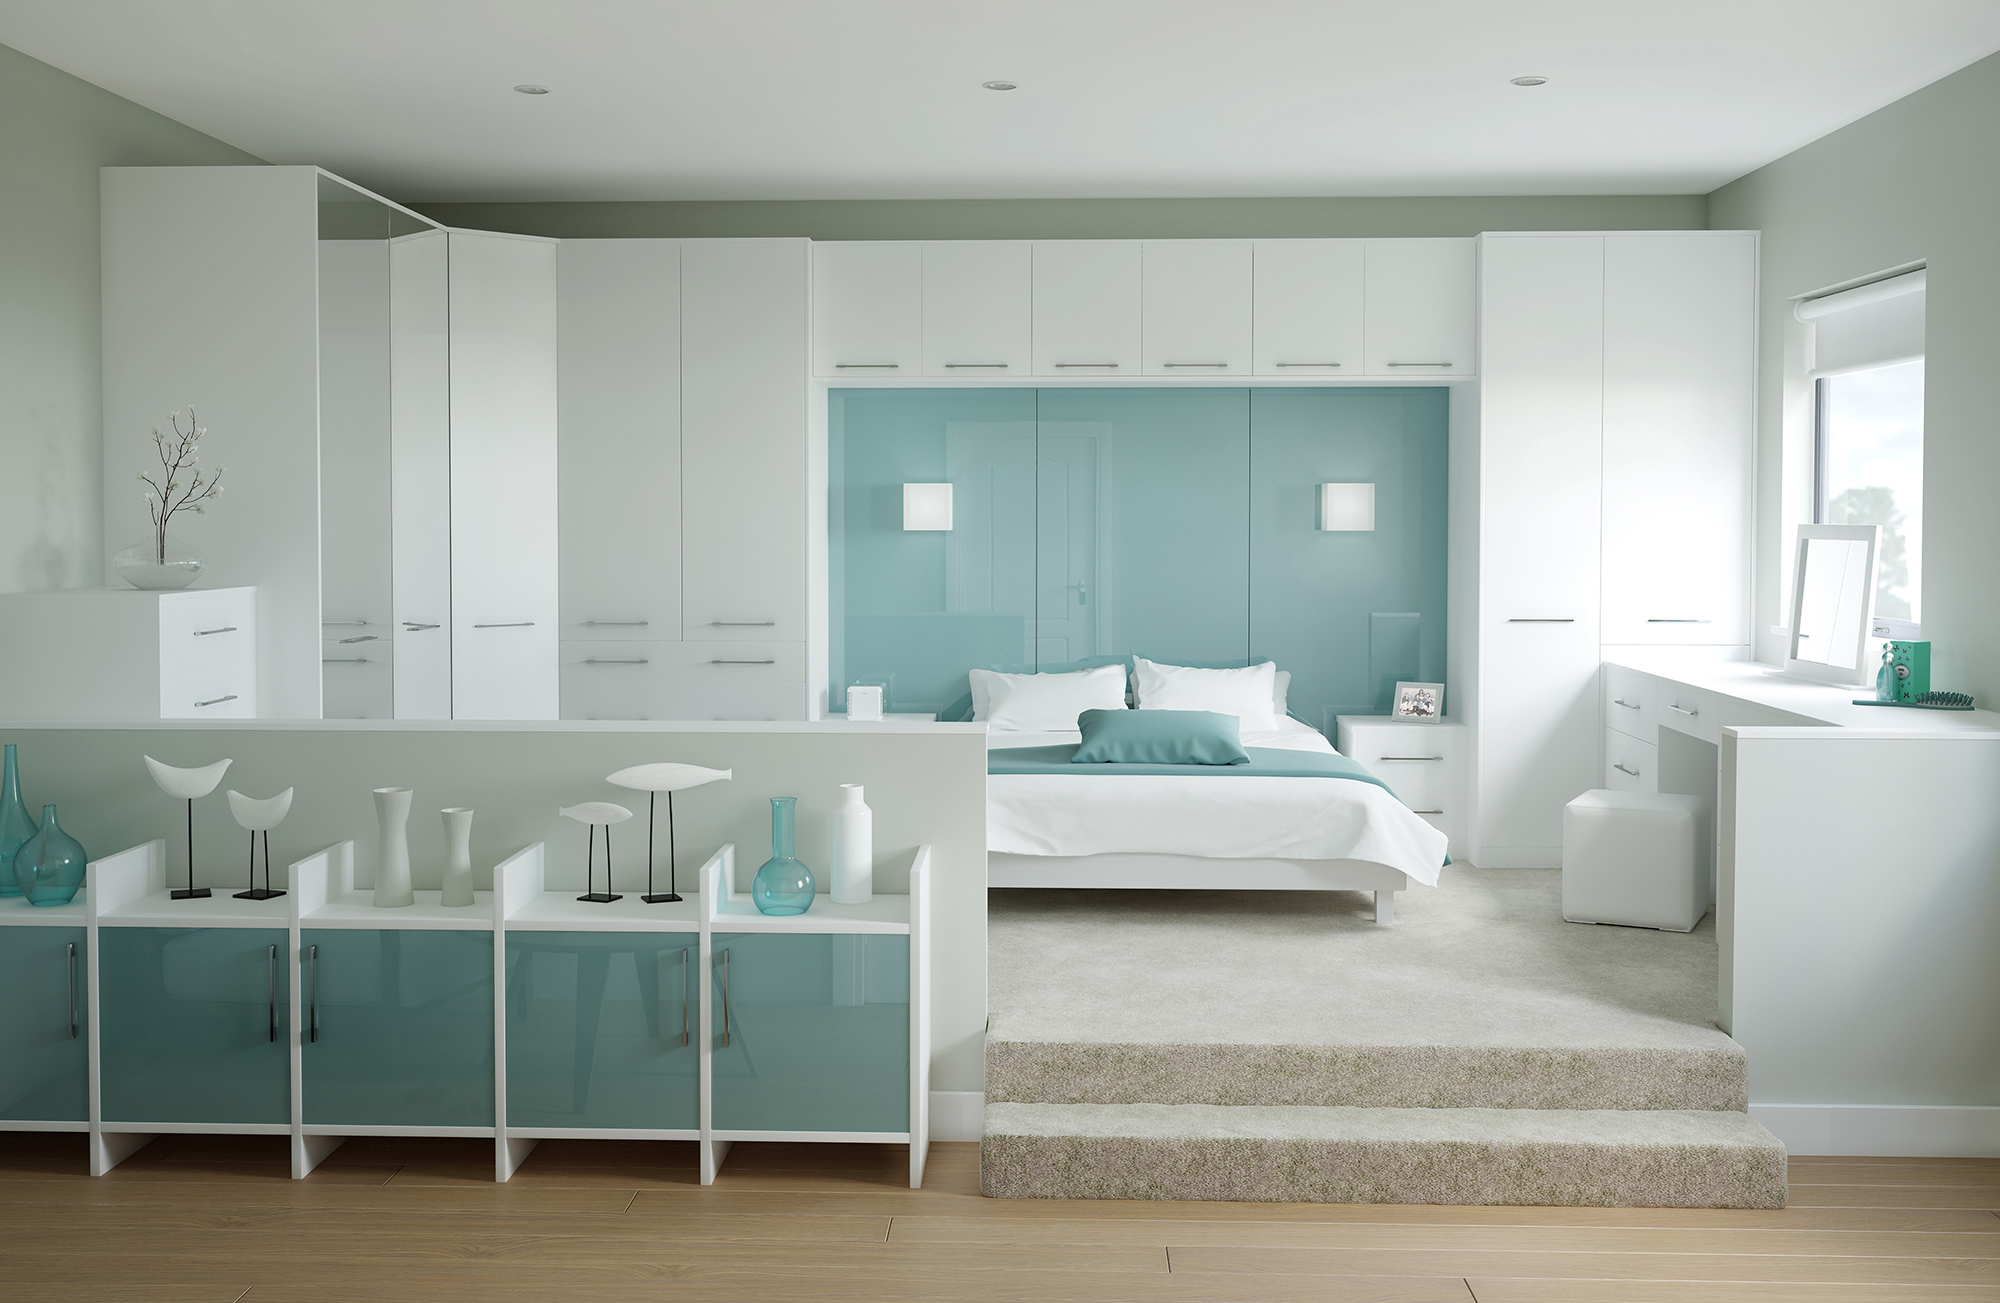  Bedroom  Layout  Design  Guide Build It